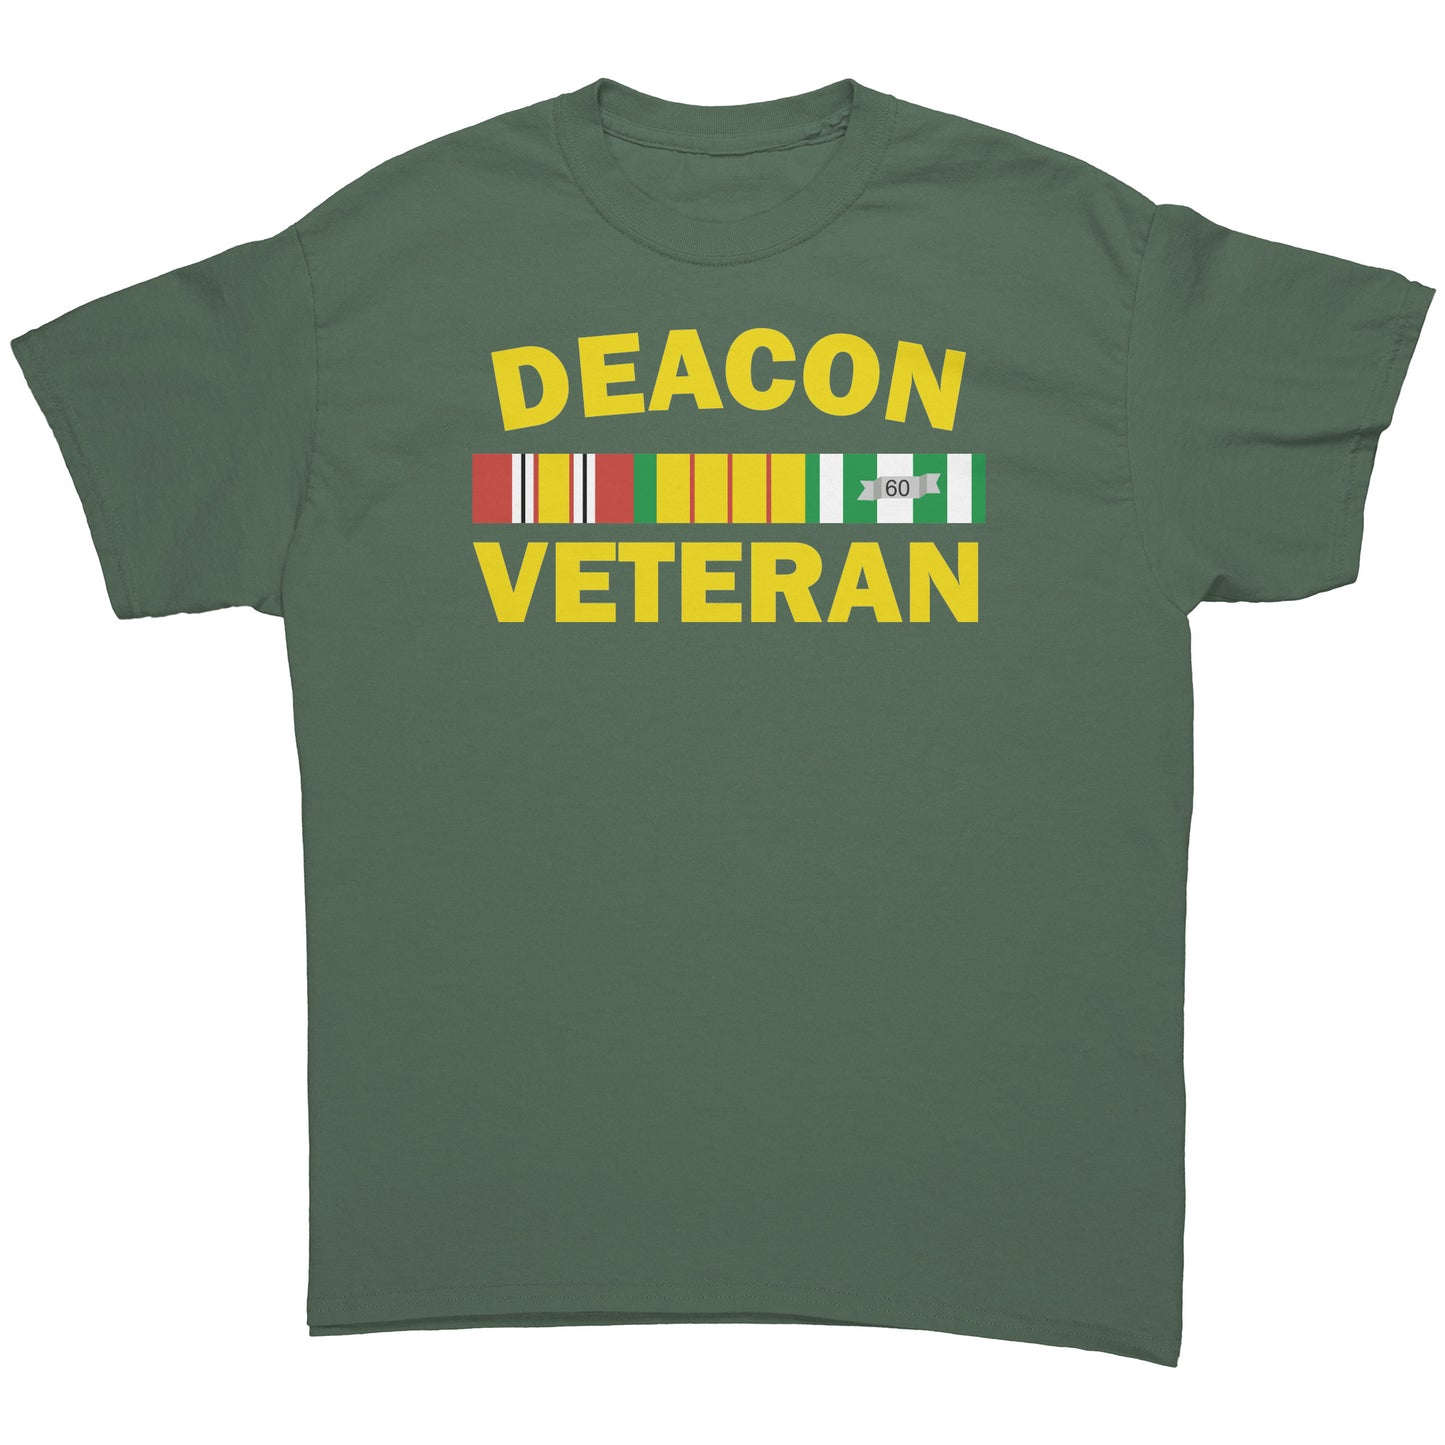 Deacon Veteran Men's T-Shirt